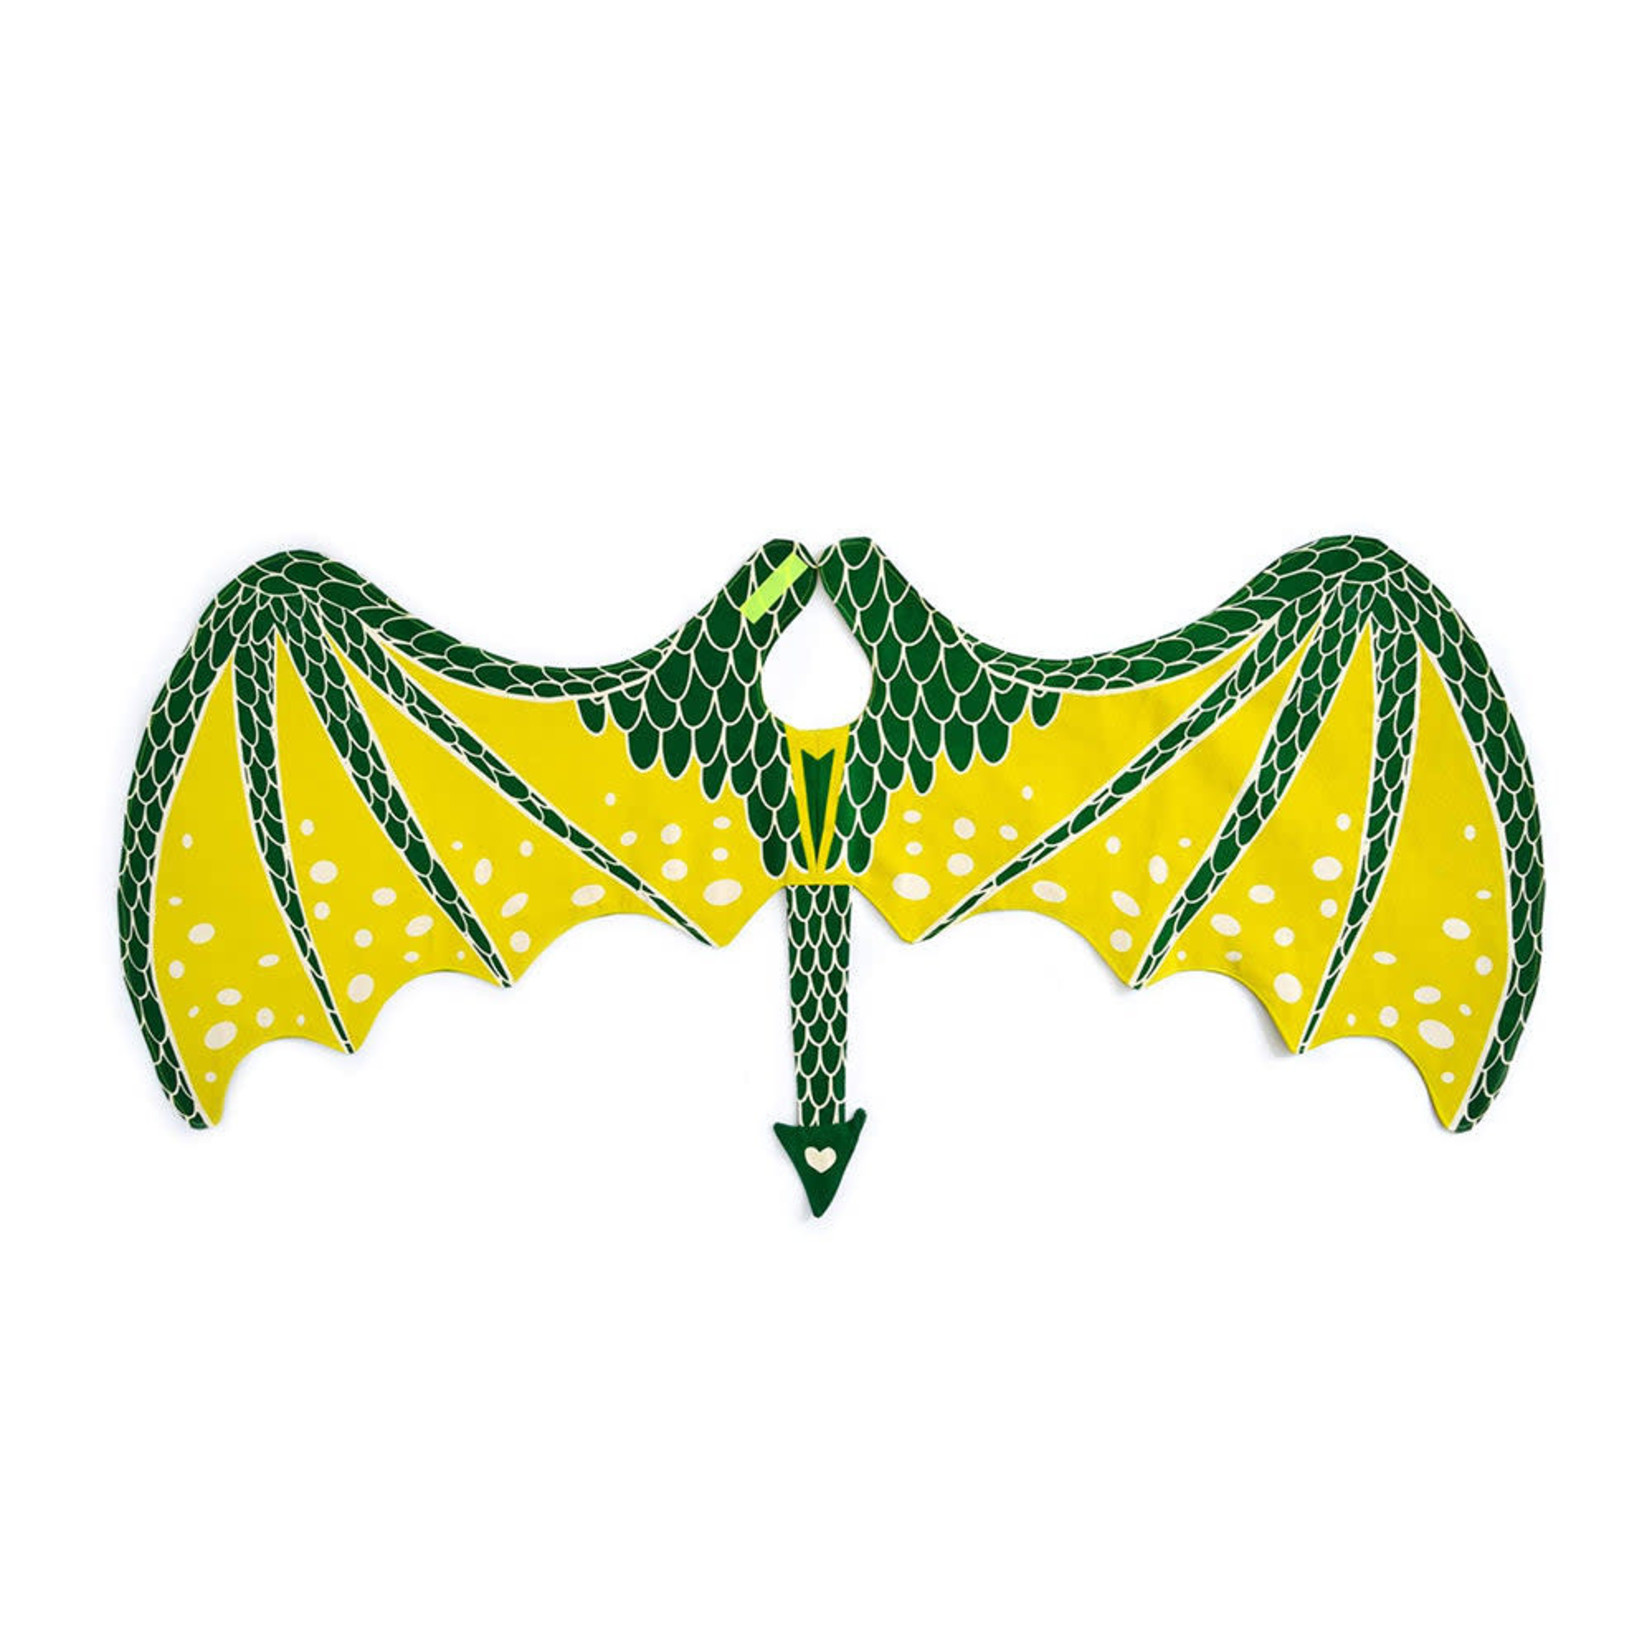 love lane designs green dragon wings